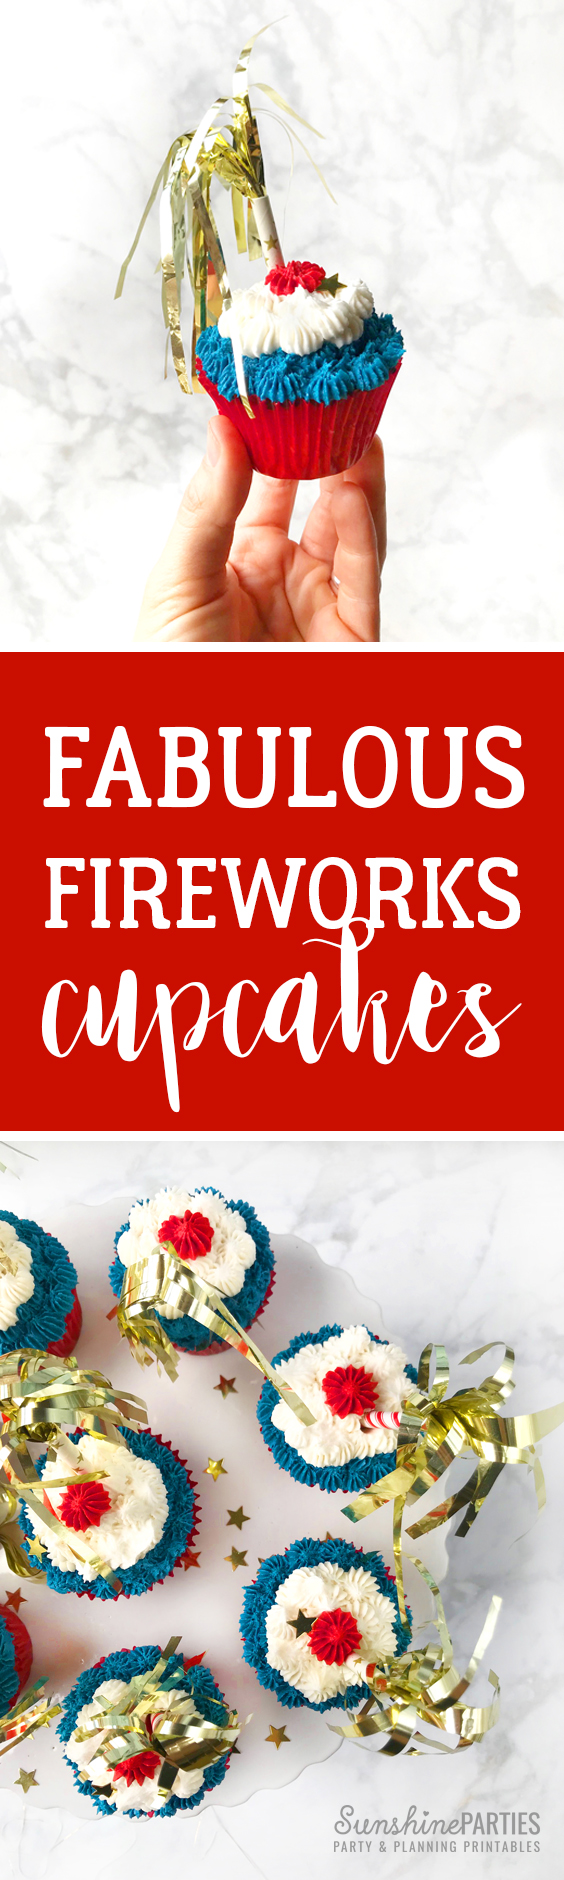 Firework Cupcakes Recipe 4th July